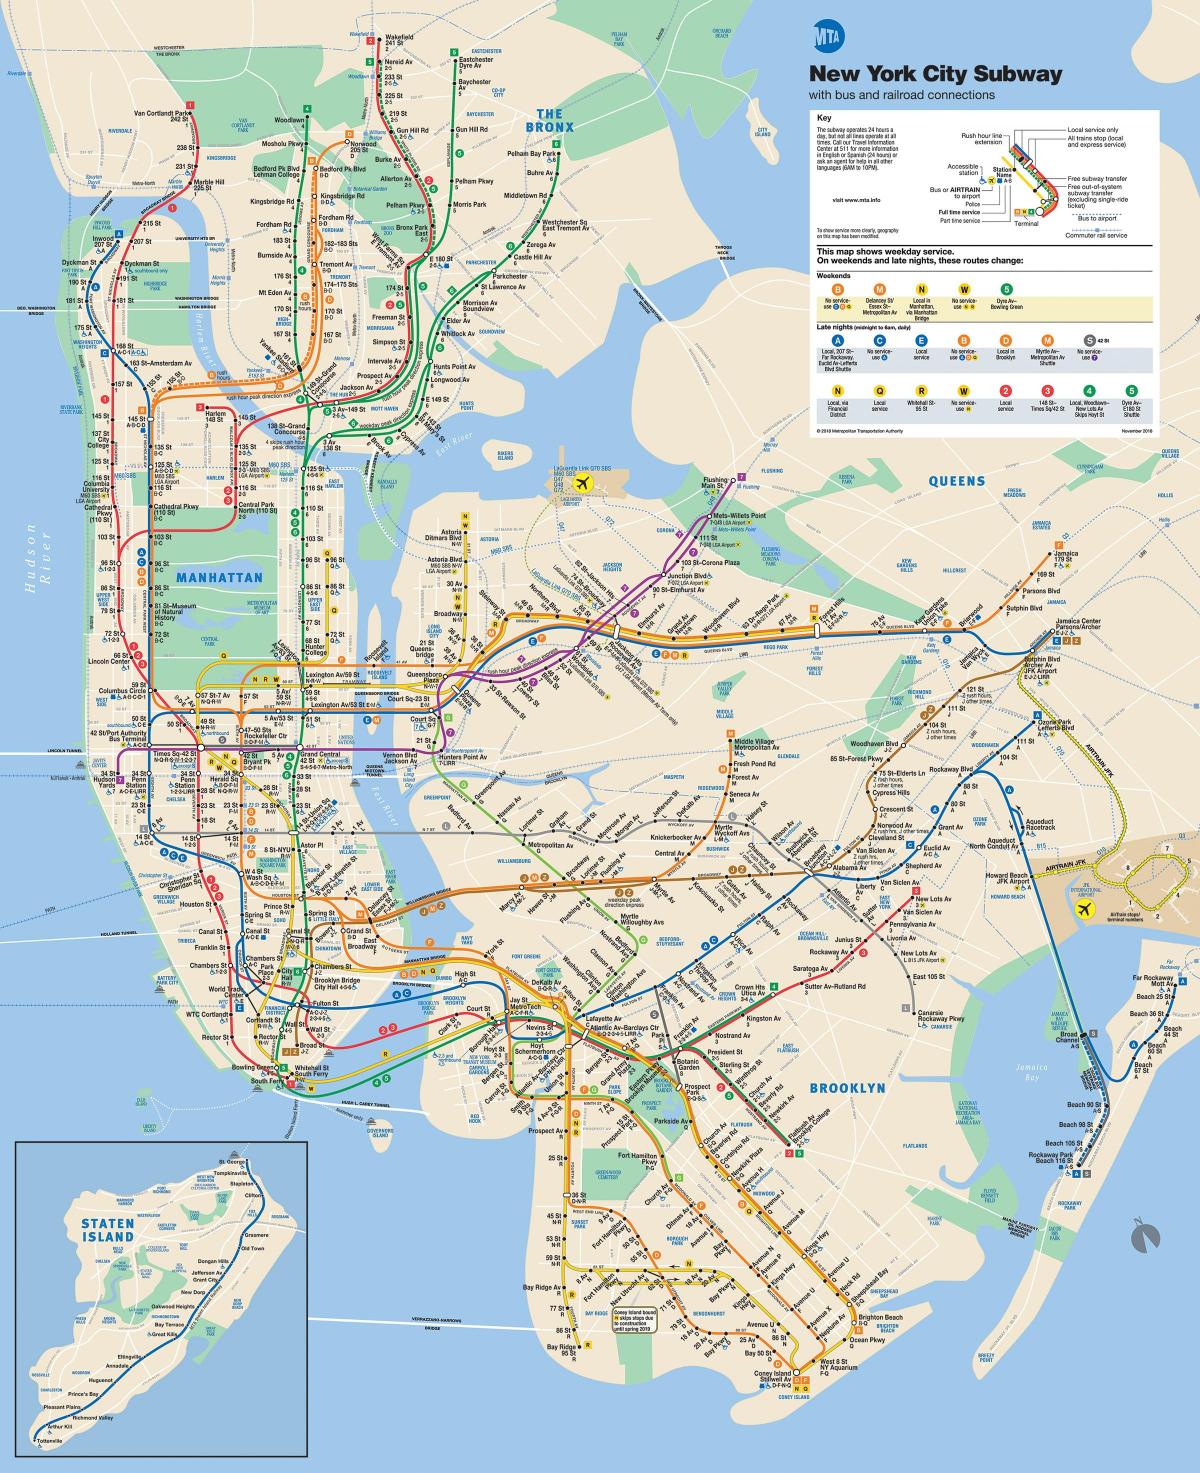 NYC მეტროს რუკა, მანჰეტენზე